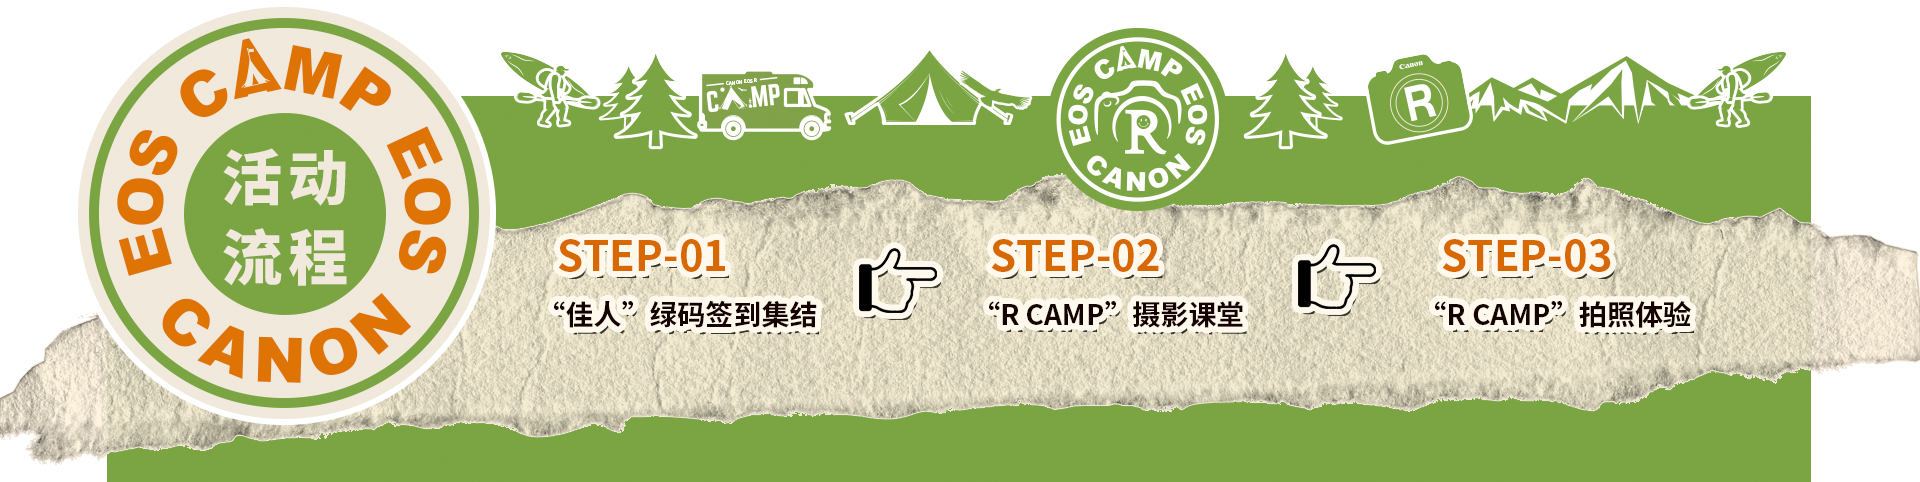 R CAMP活动流程